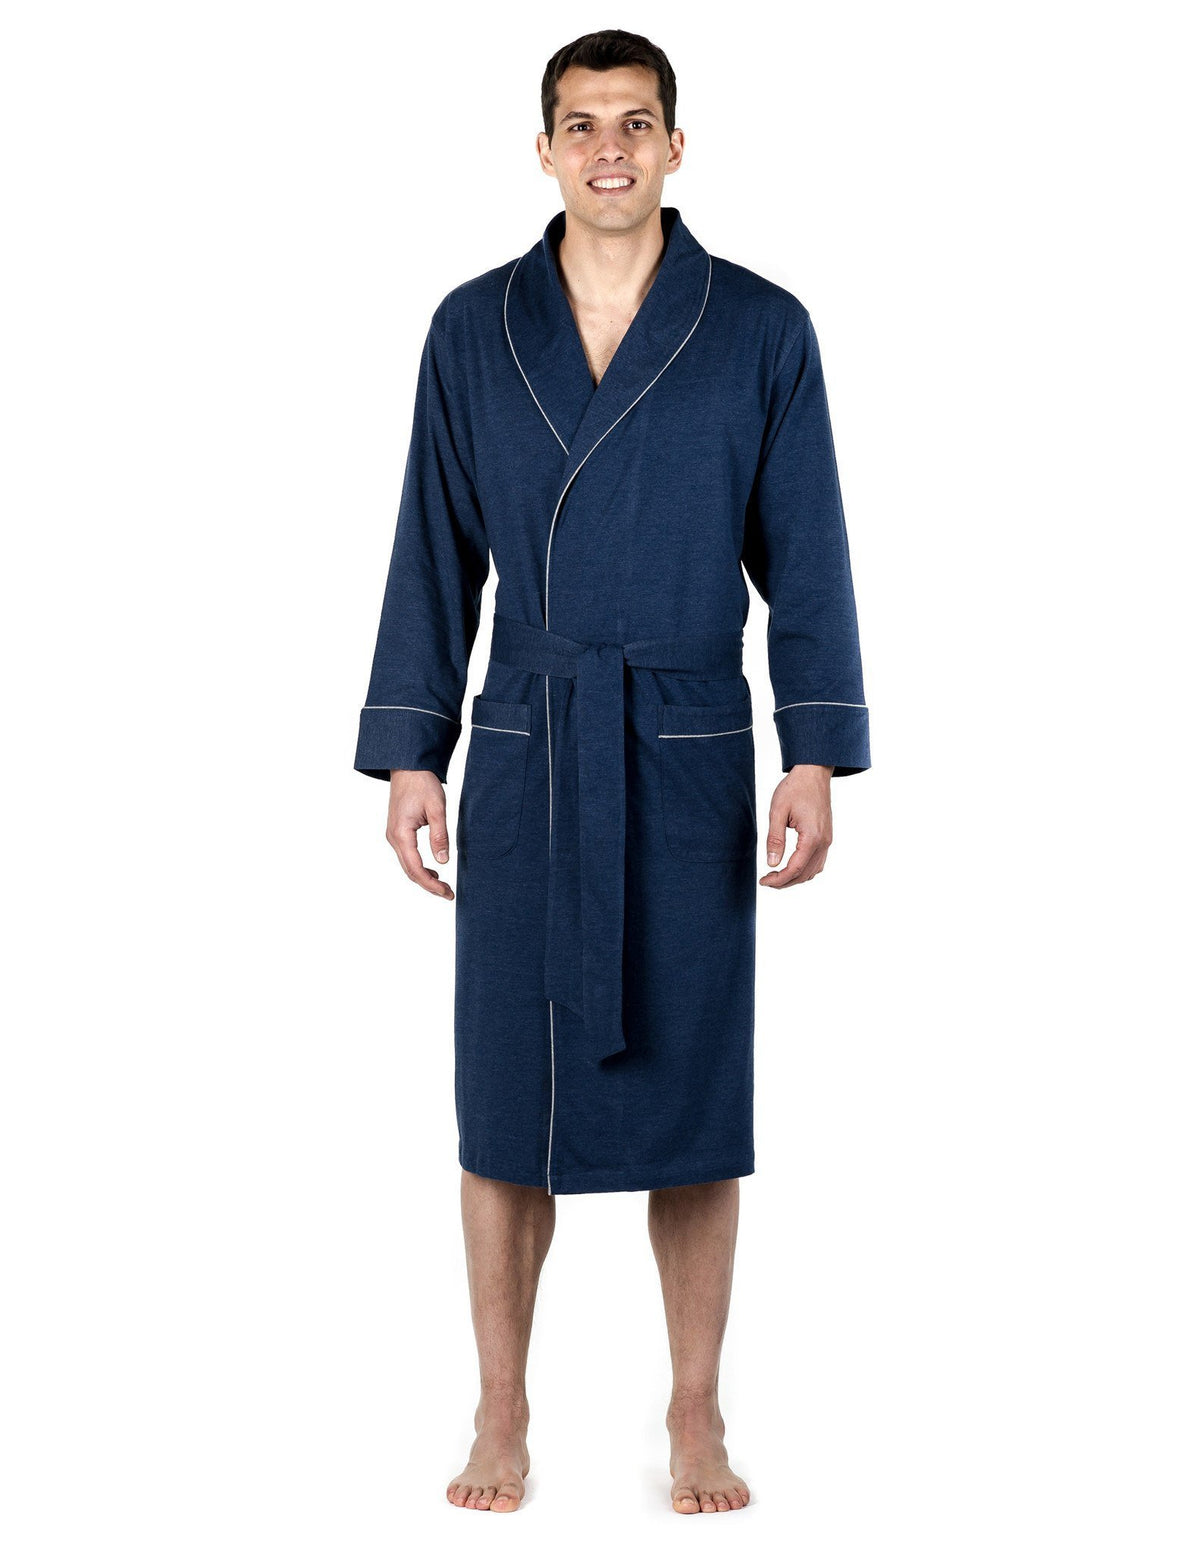 Men's Premium Knit Jersey Robe - Navy